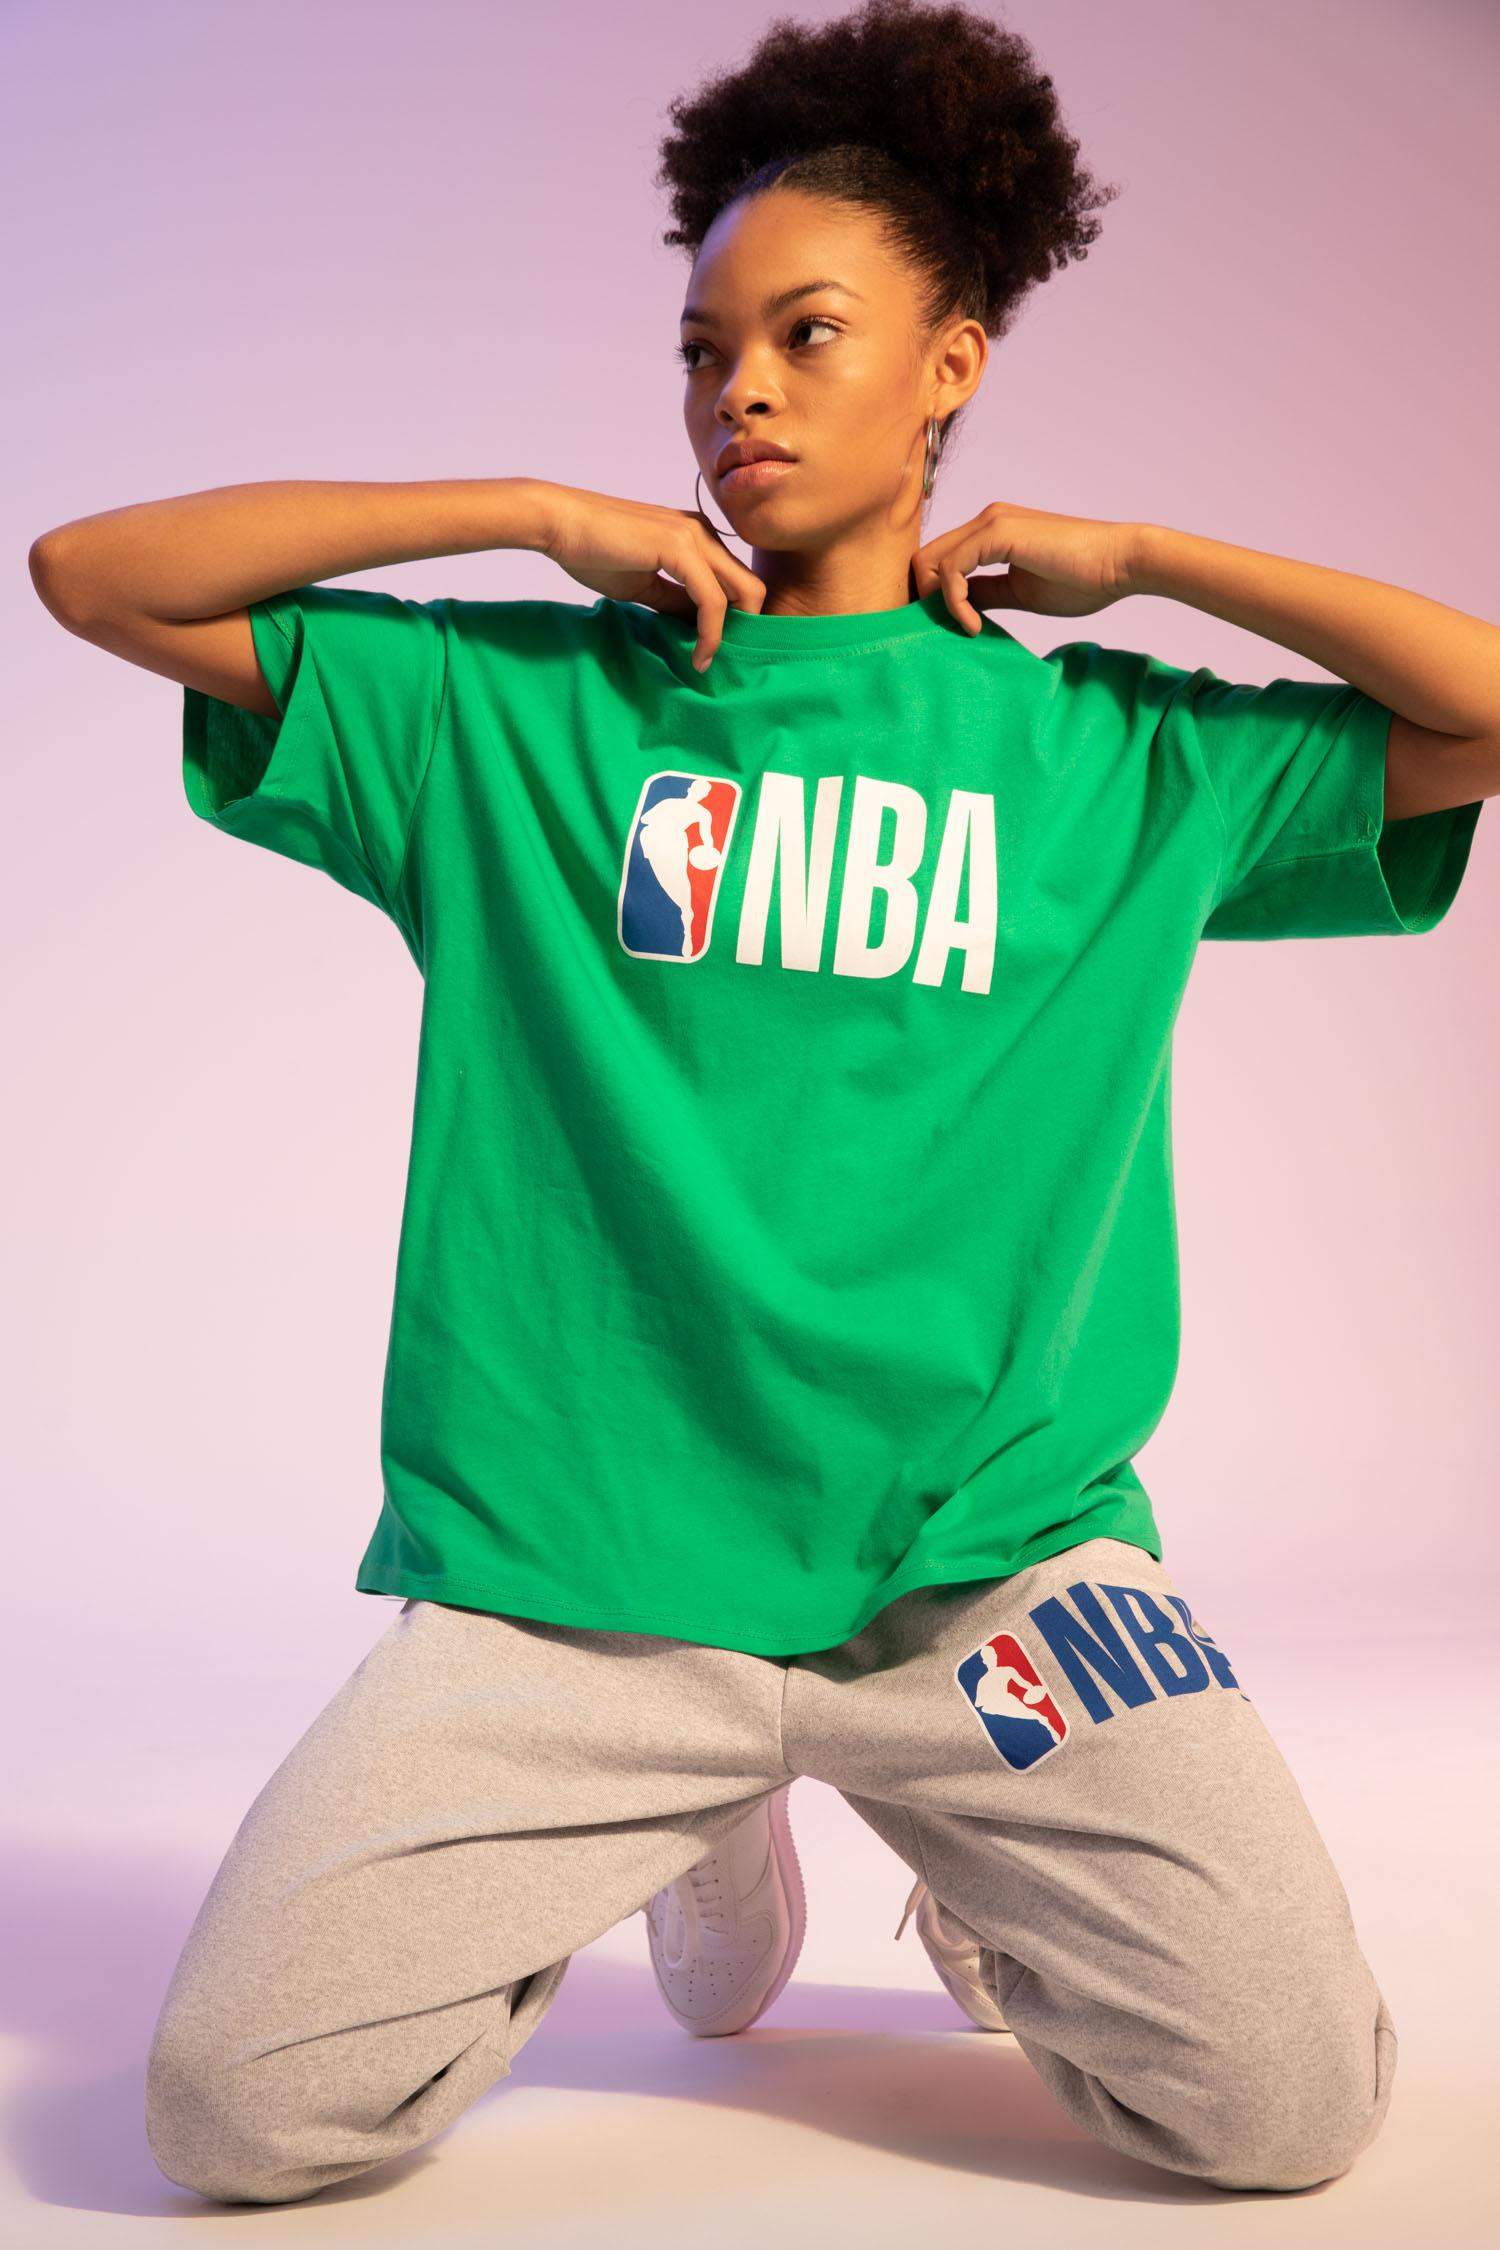 DeFactoFit NBA Boston Celtics Licensed Oversize Fit Crew Neck T-Shirt